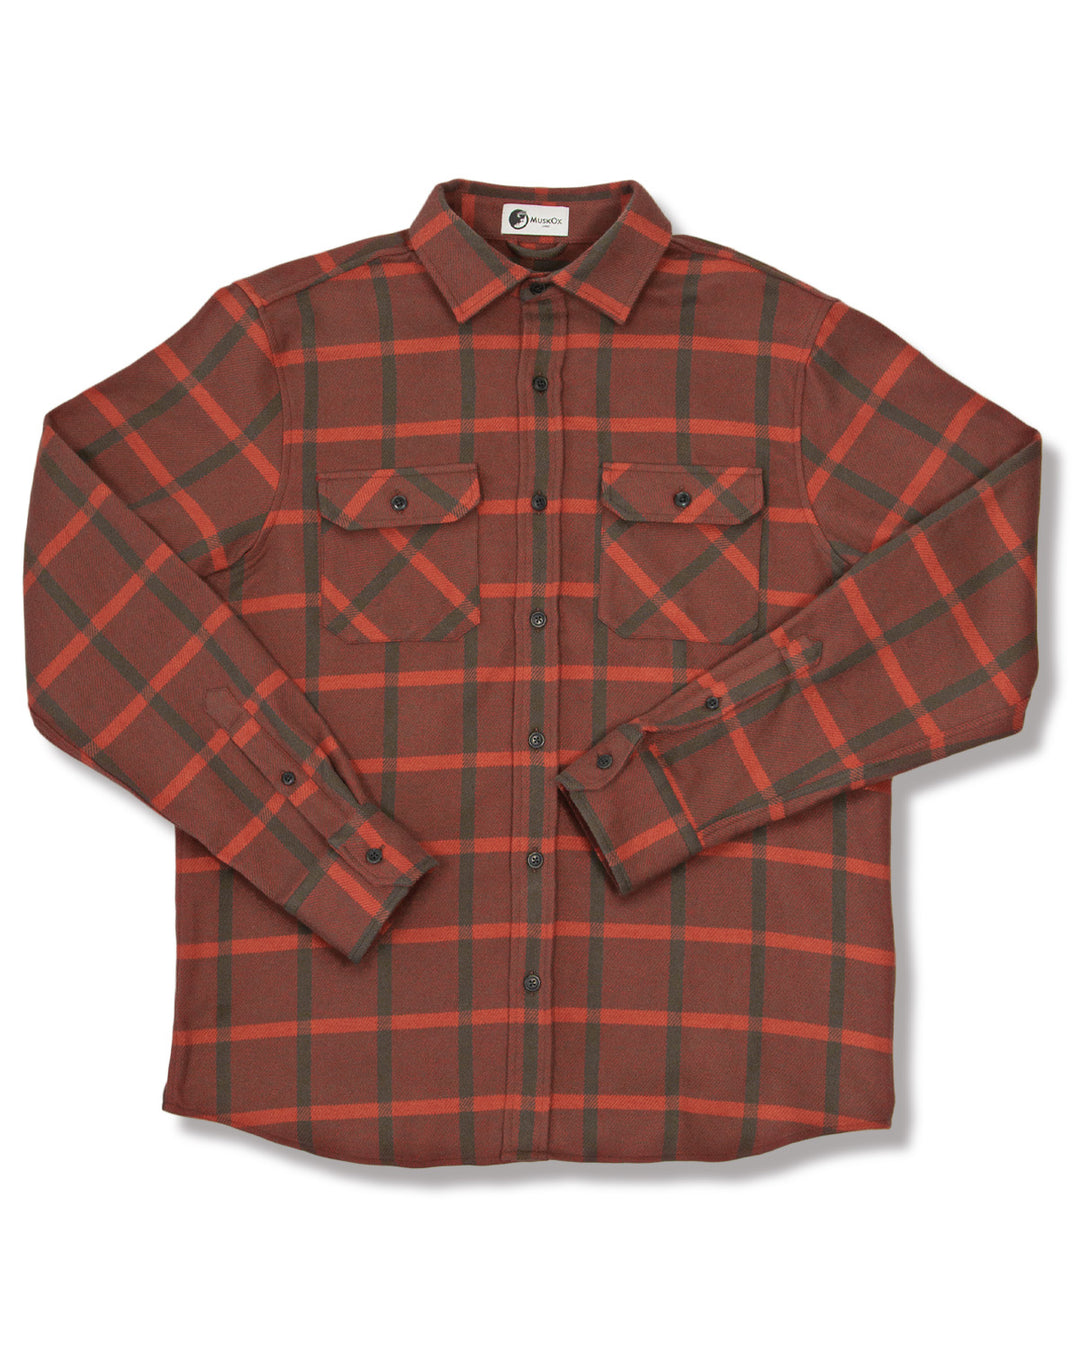 Flannel Shirt with Hood - Dark red/black plaid - Men